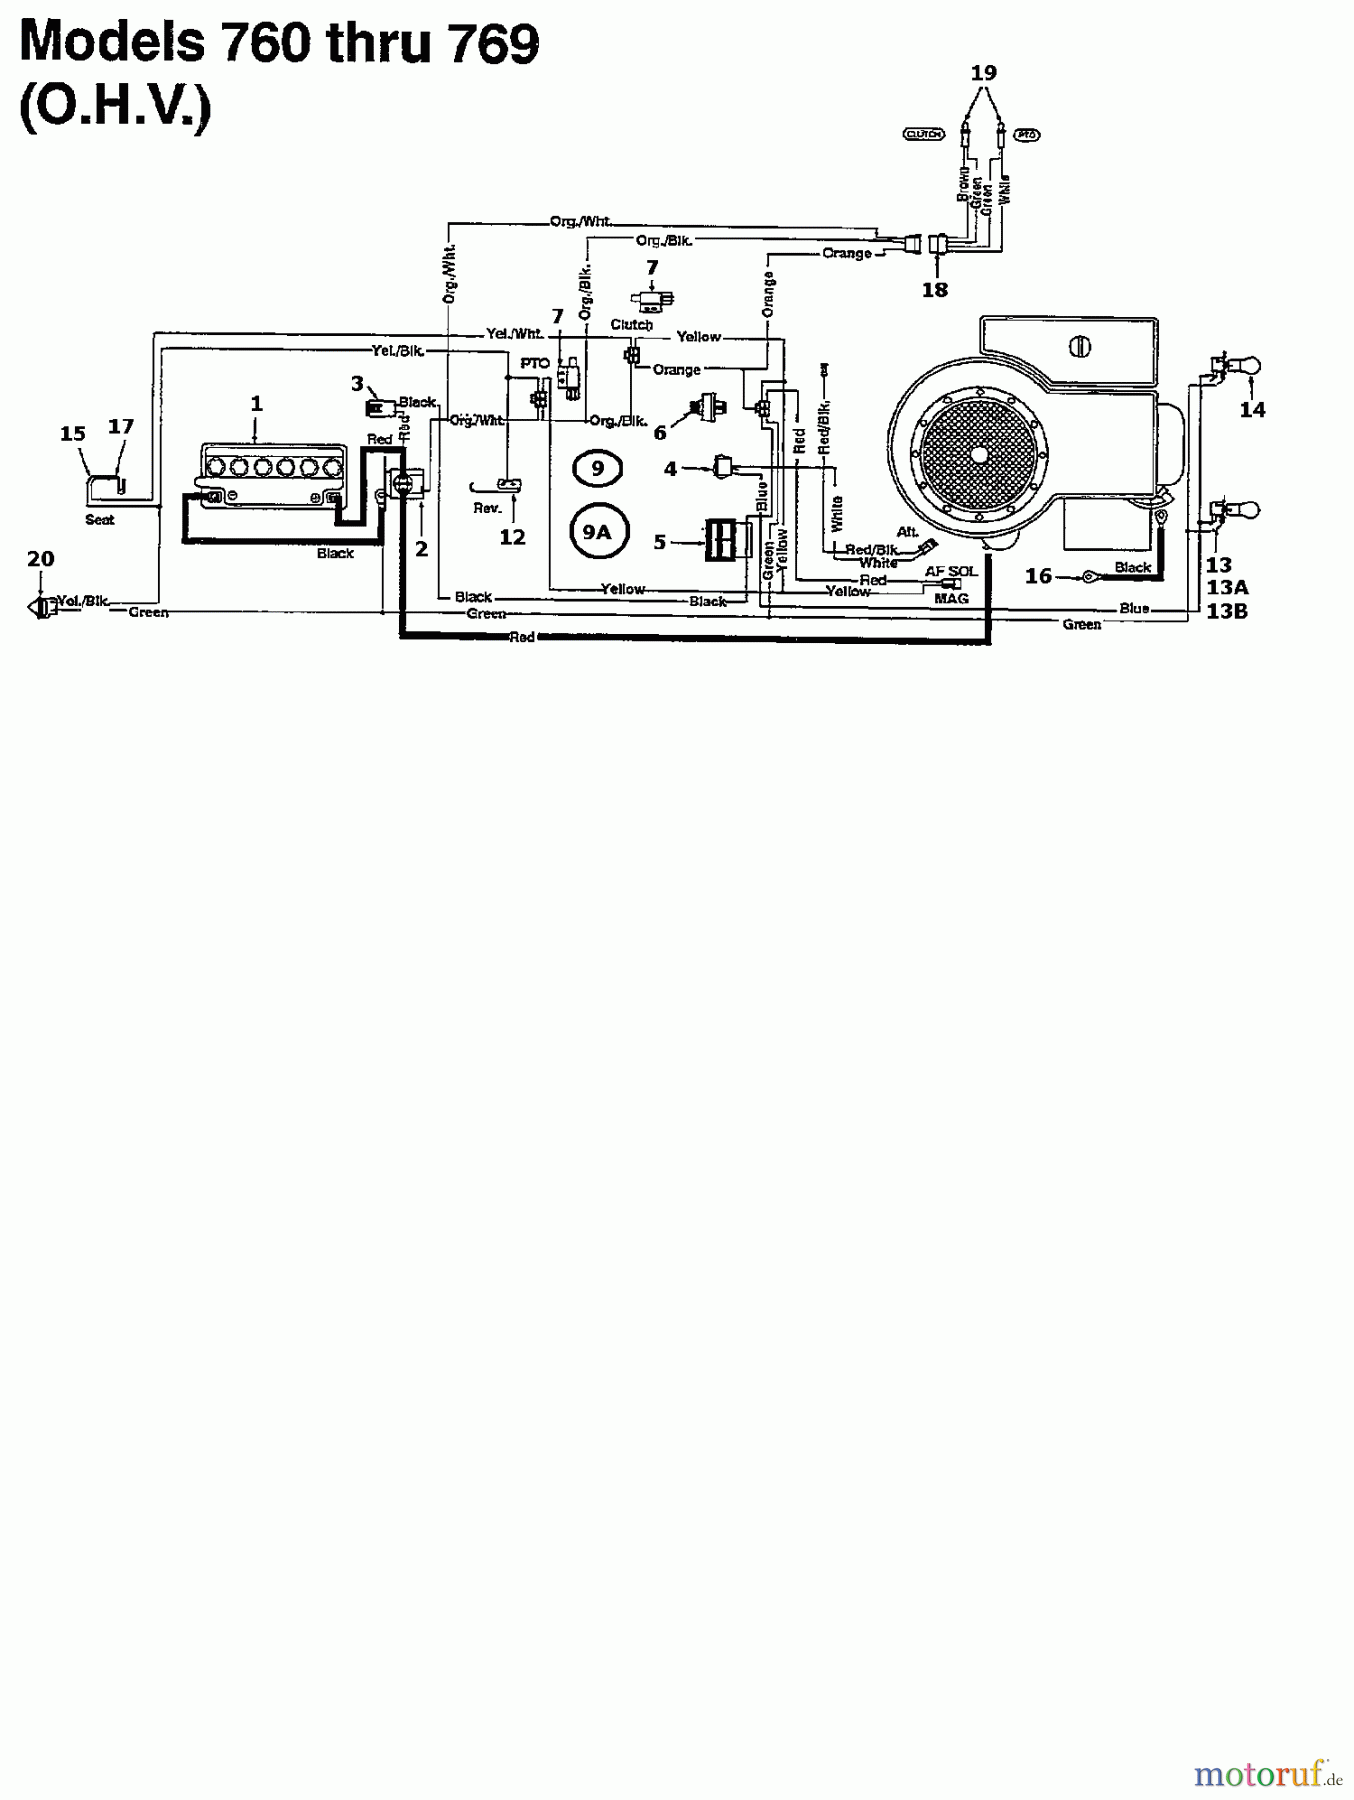  Raiffeisen Lawn tractors RMH 13/102 135N765N628  (1995) Wiring diagram for O.H.V.